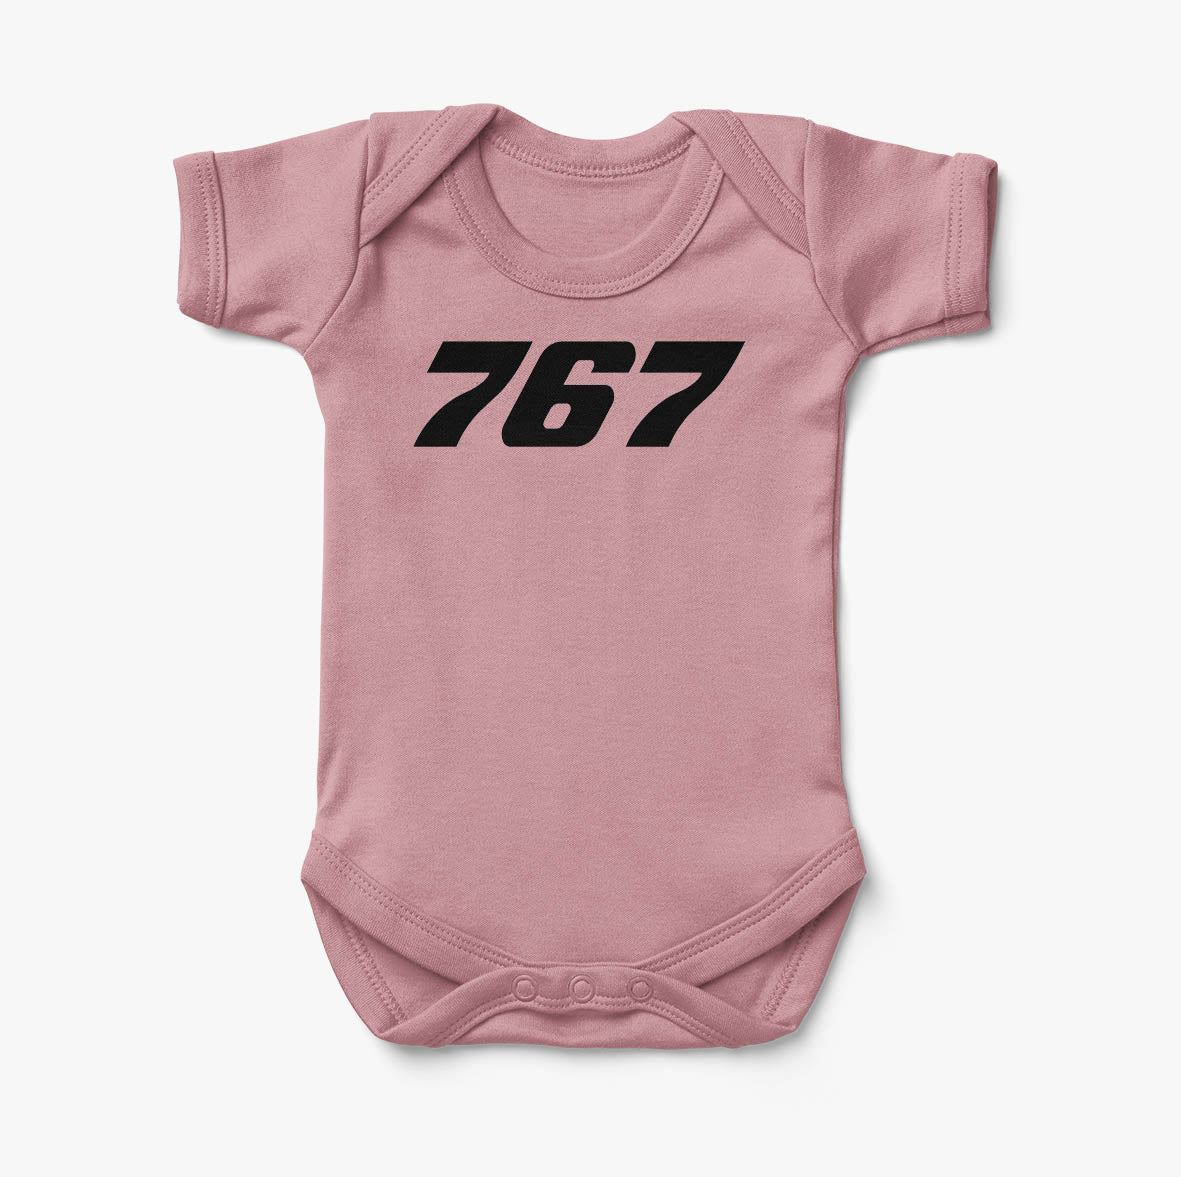 767 Flat Text Designed Baby Bodysuits